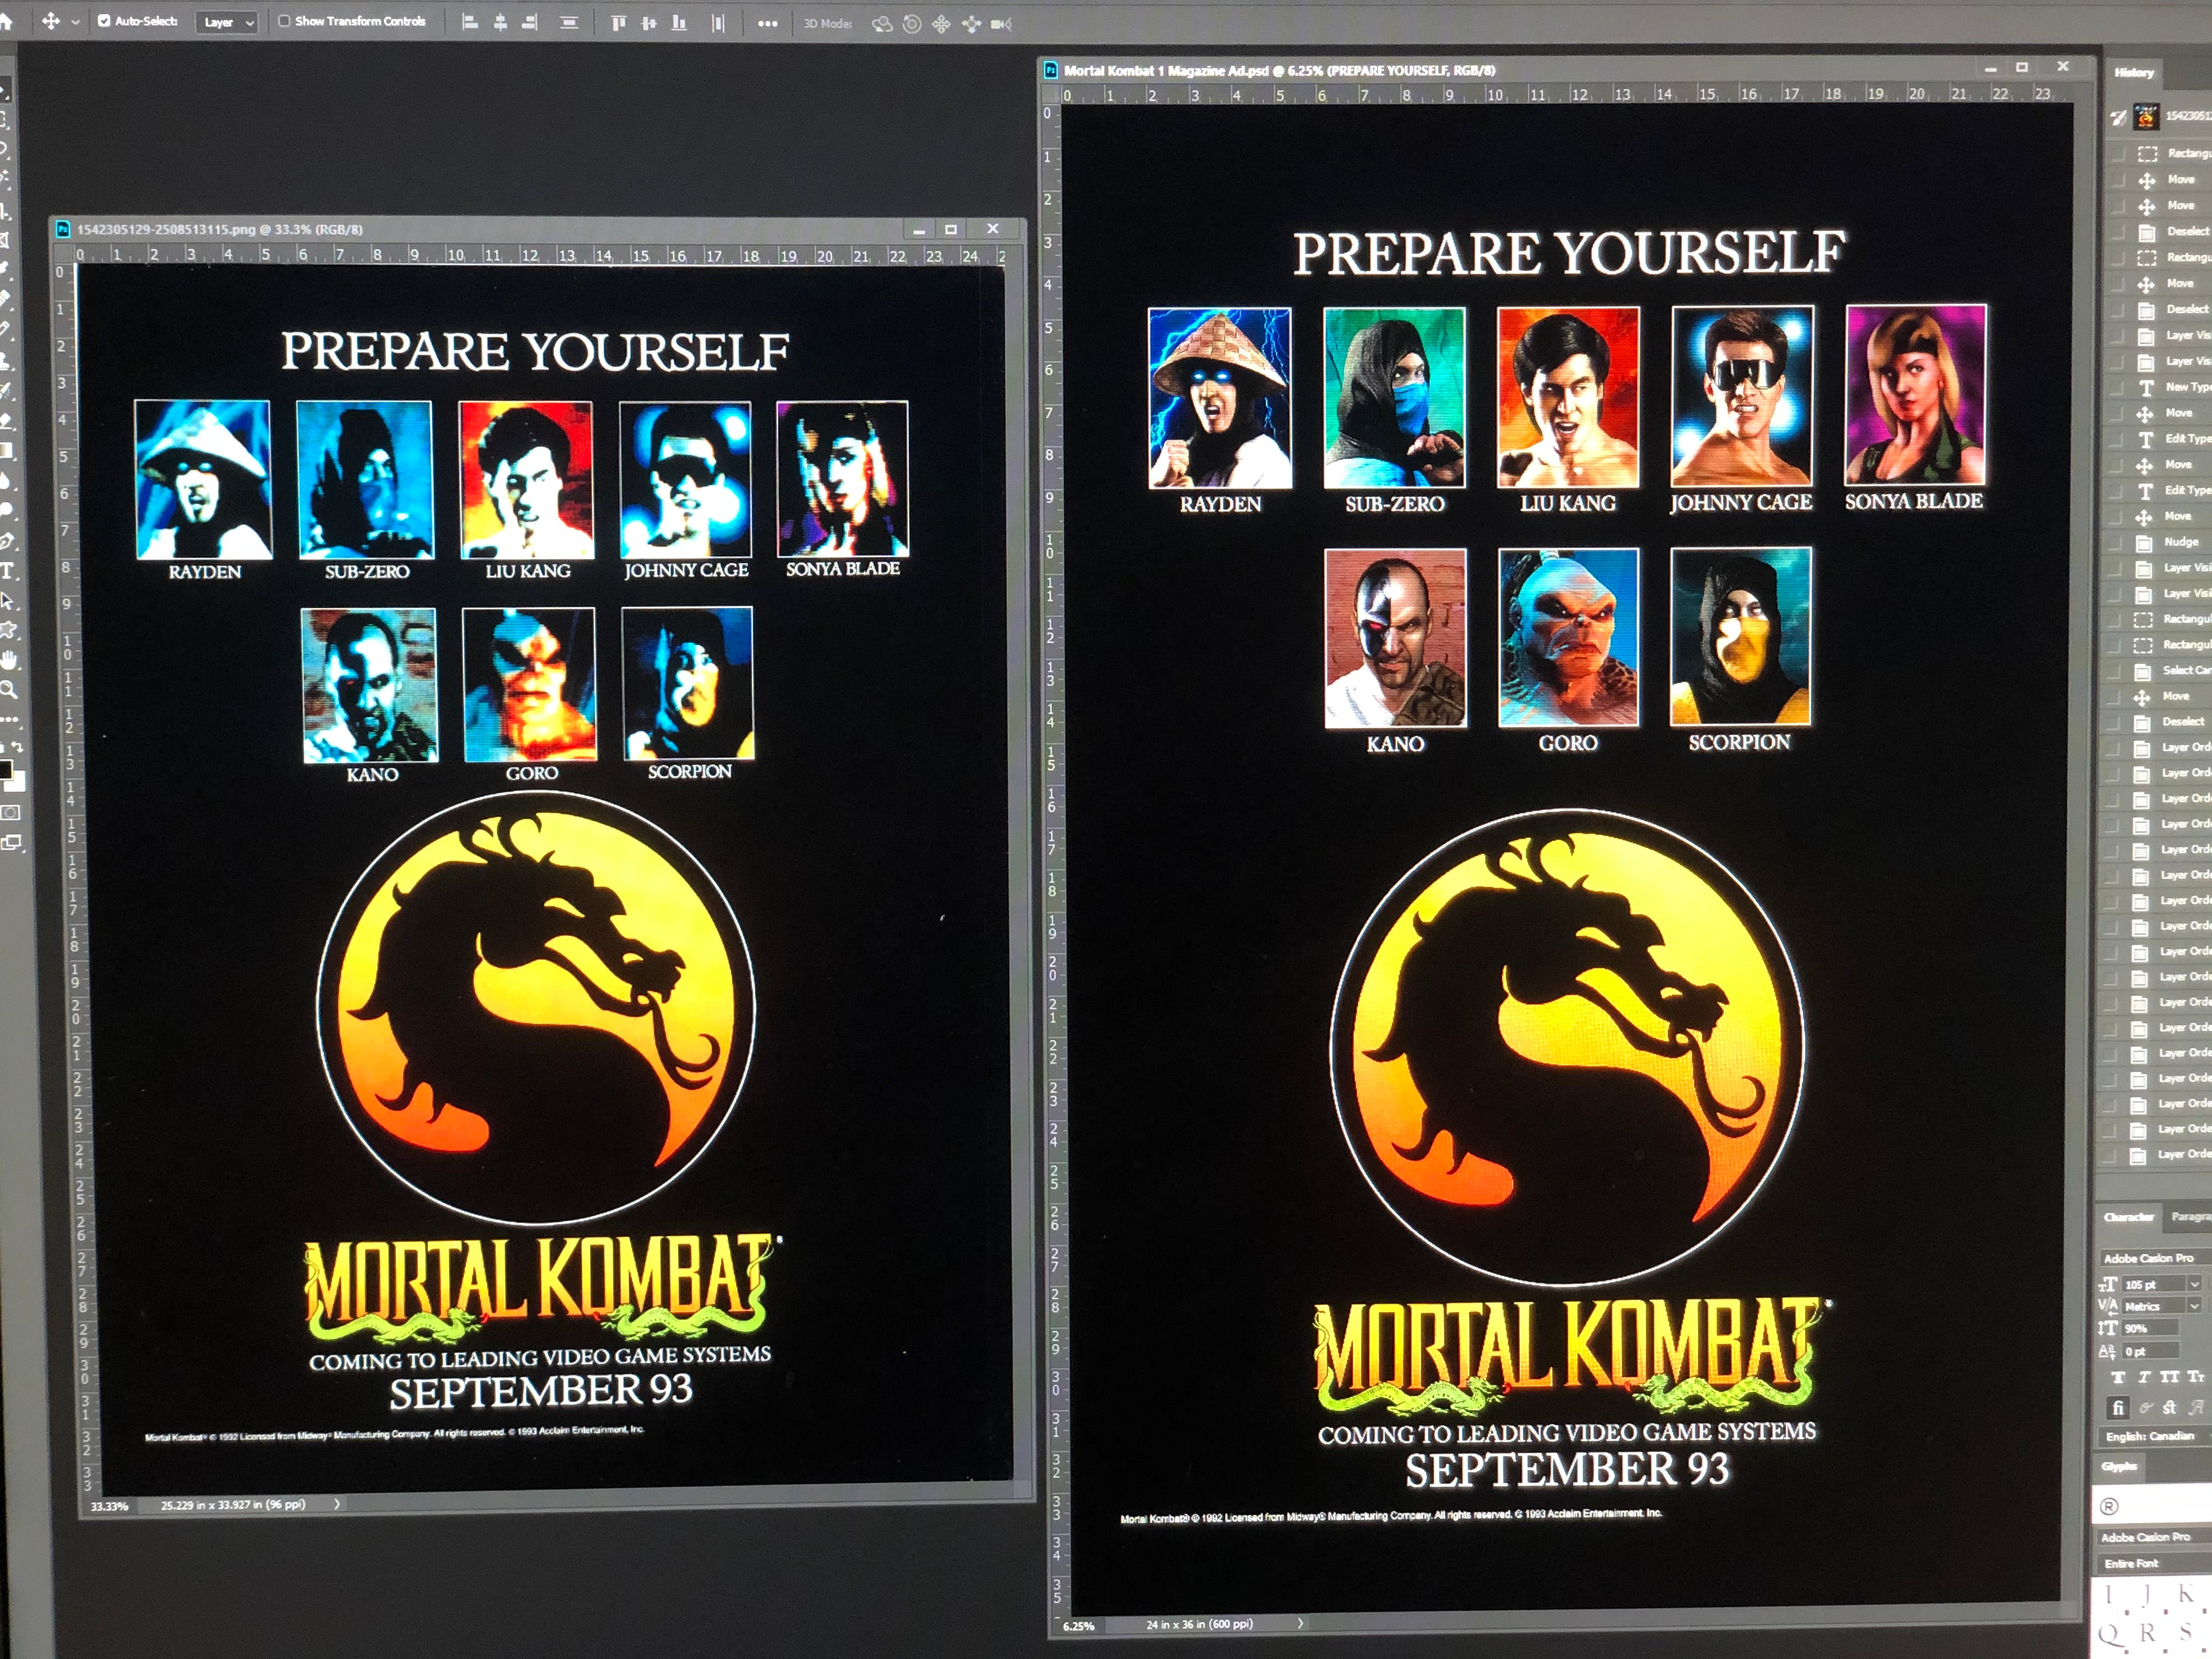 Mortal Kombat X - Gaming Poster (Characters) (Size: 24 x 36)